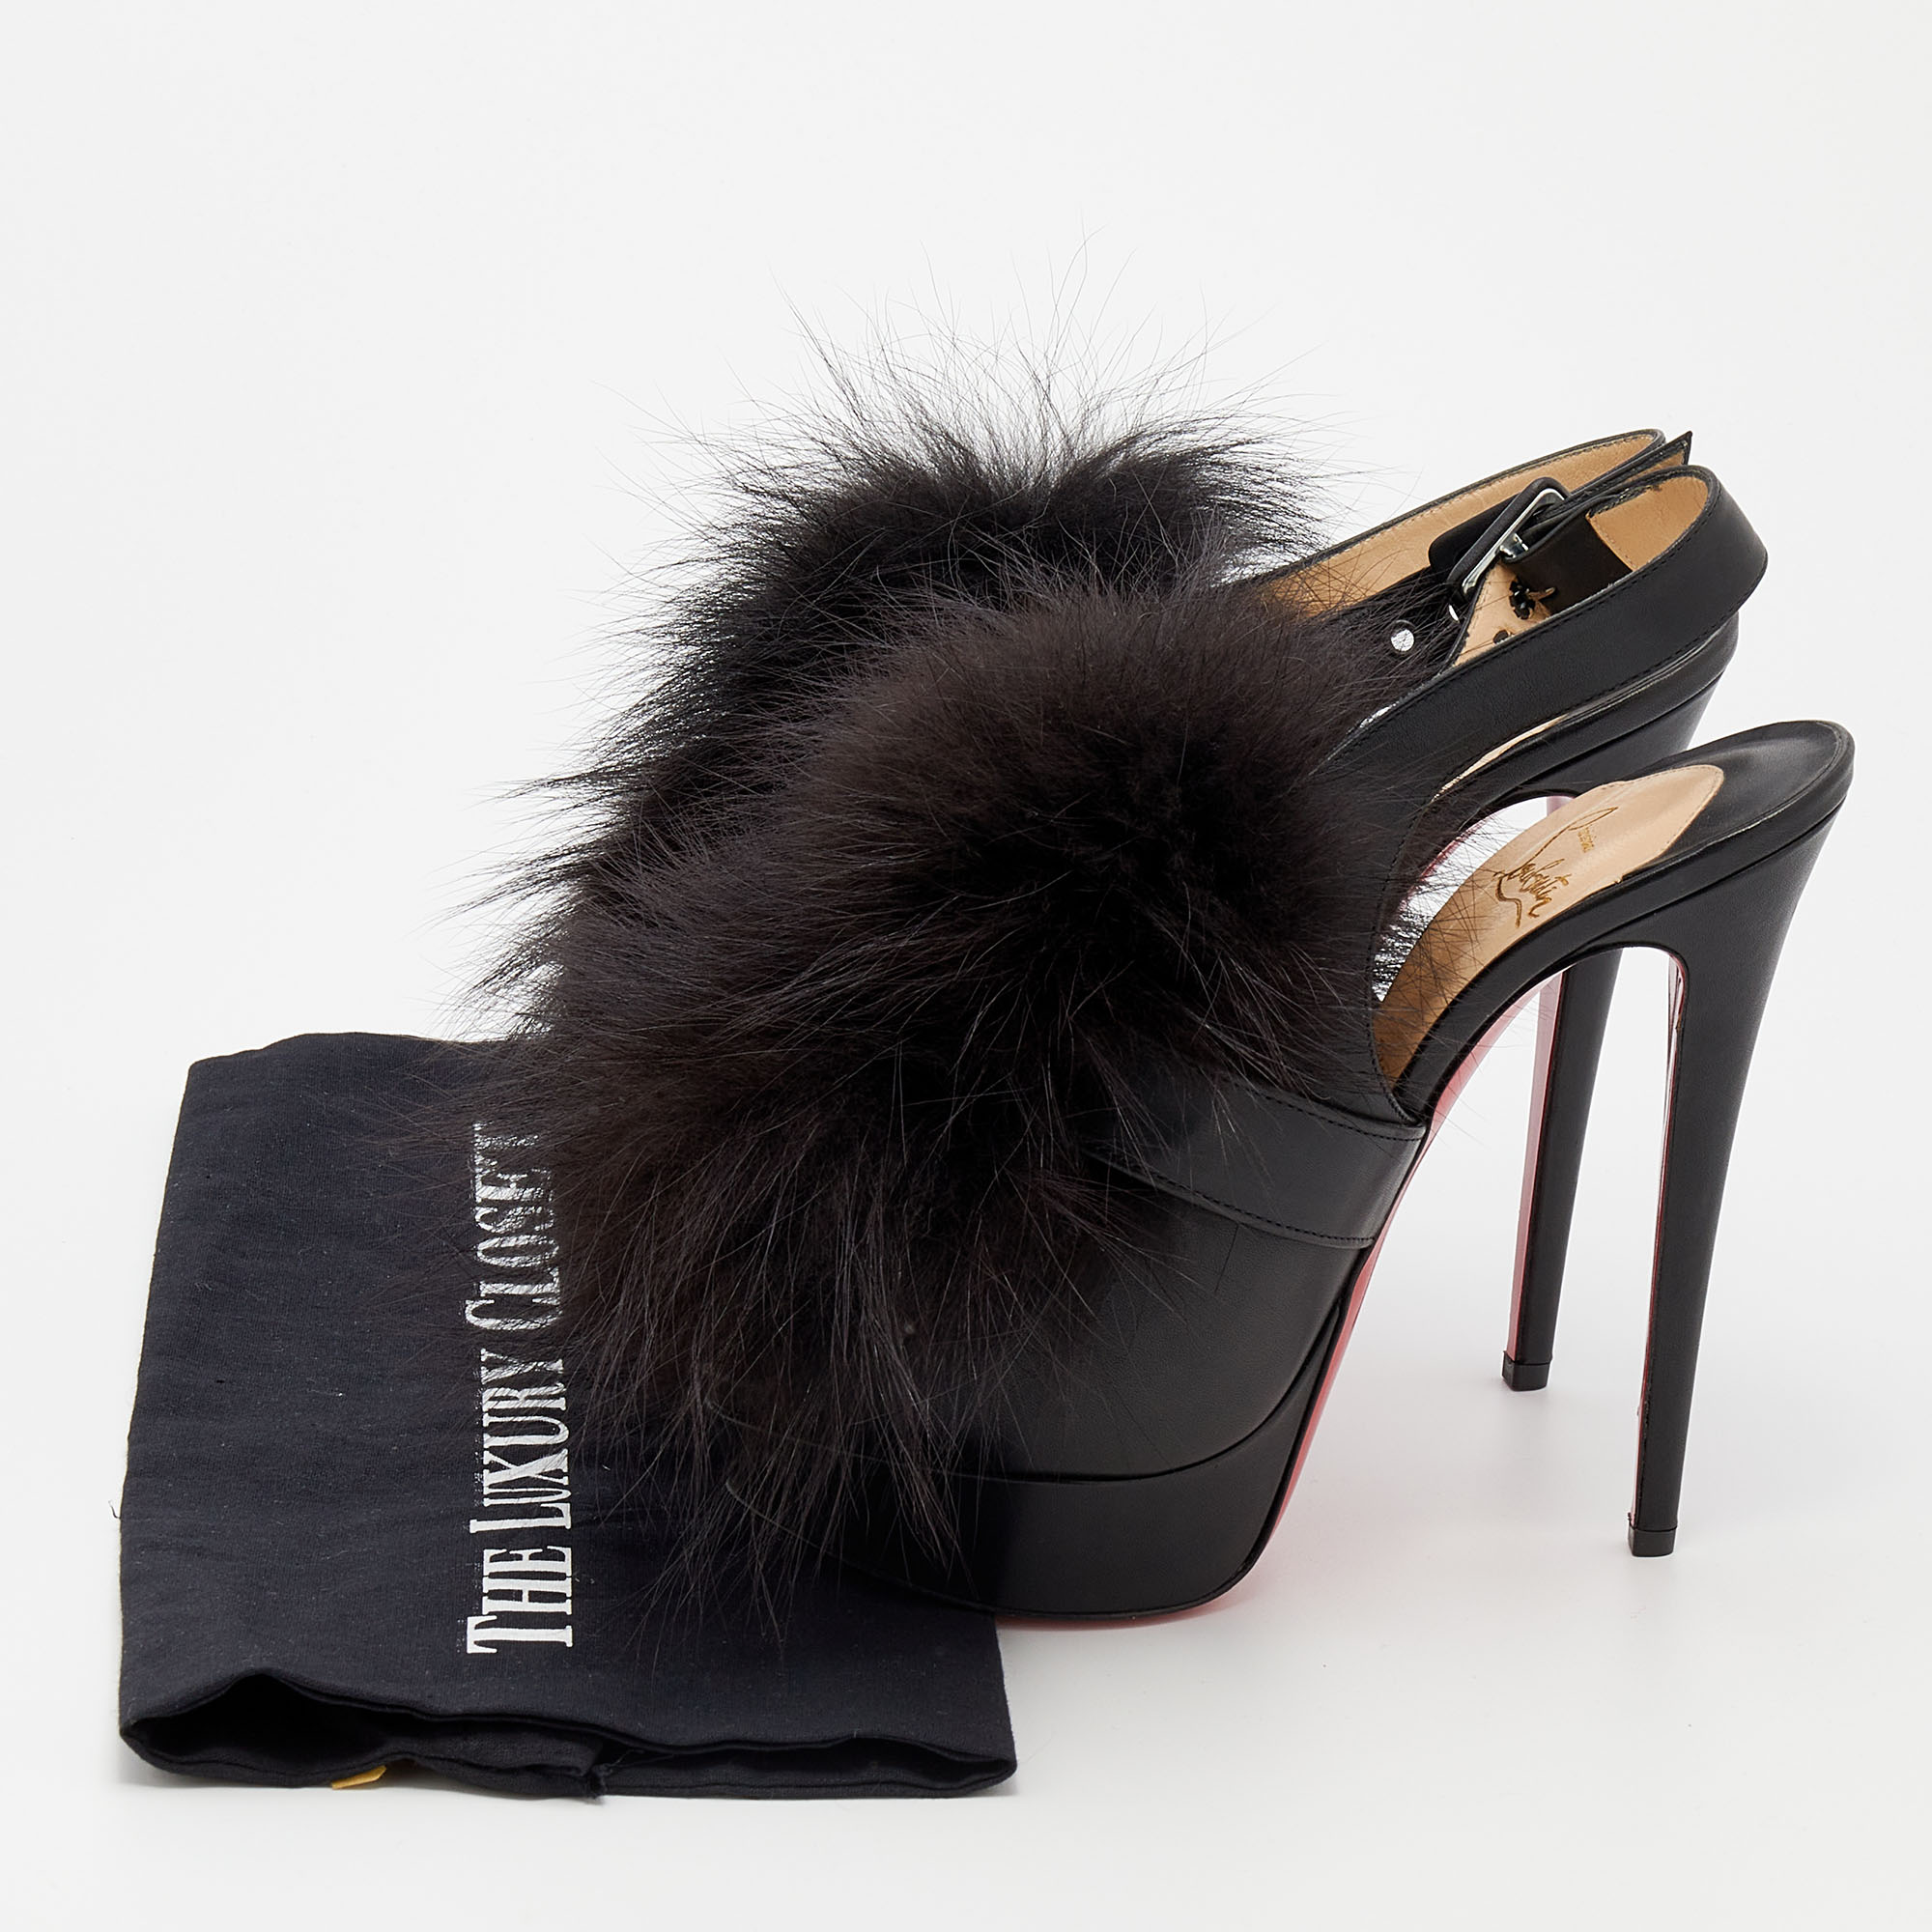 Christian Louboutin Black Leather And Splash Fur Peep Toe Platform Sandals Size 39